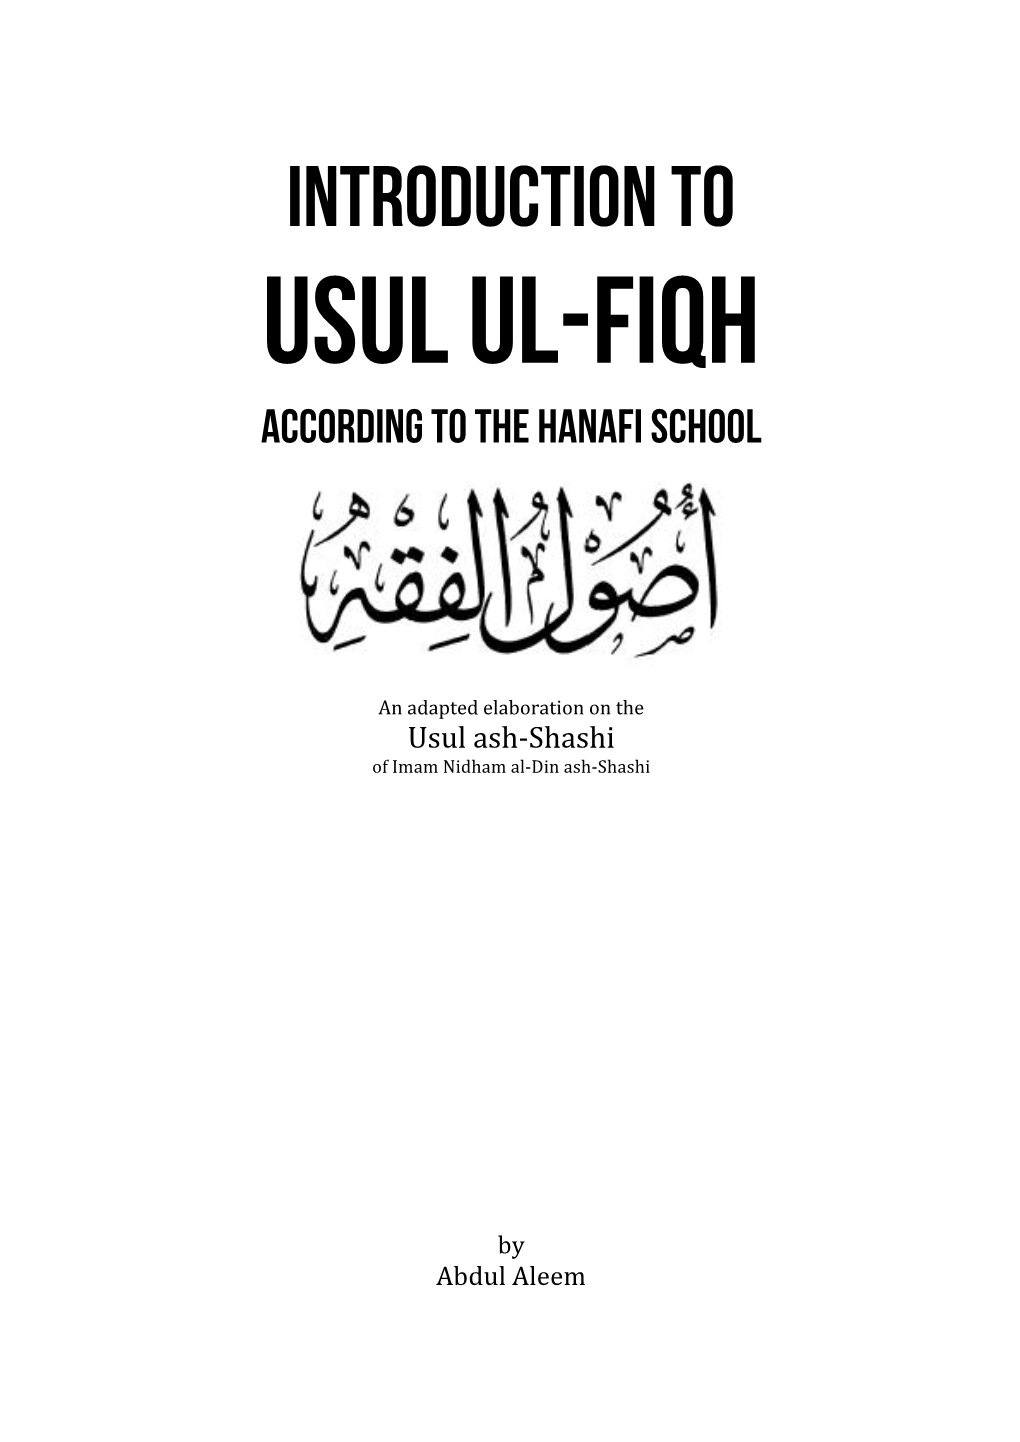 INTRODUCTION to Usul Ul-Fiqh According to the Hanafi School